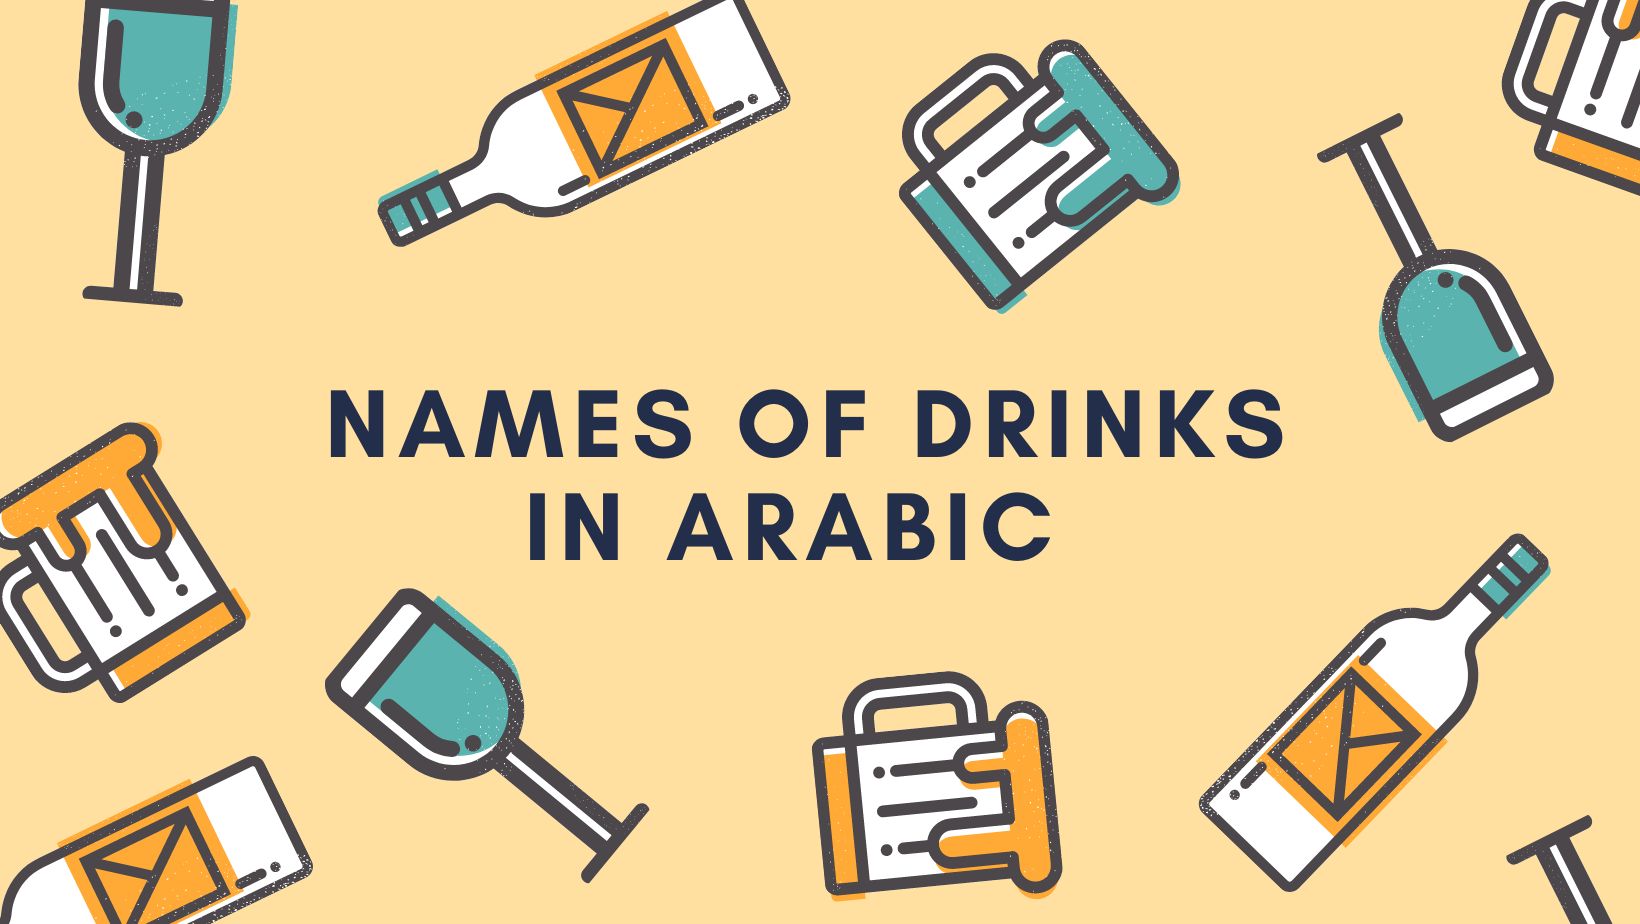 Names of drinks in Arabic